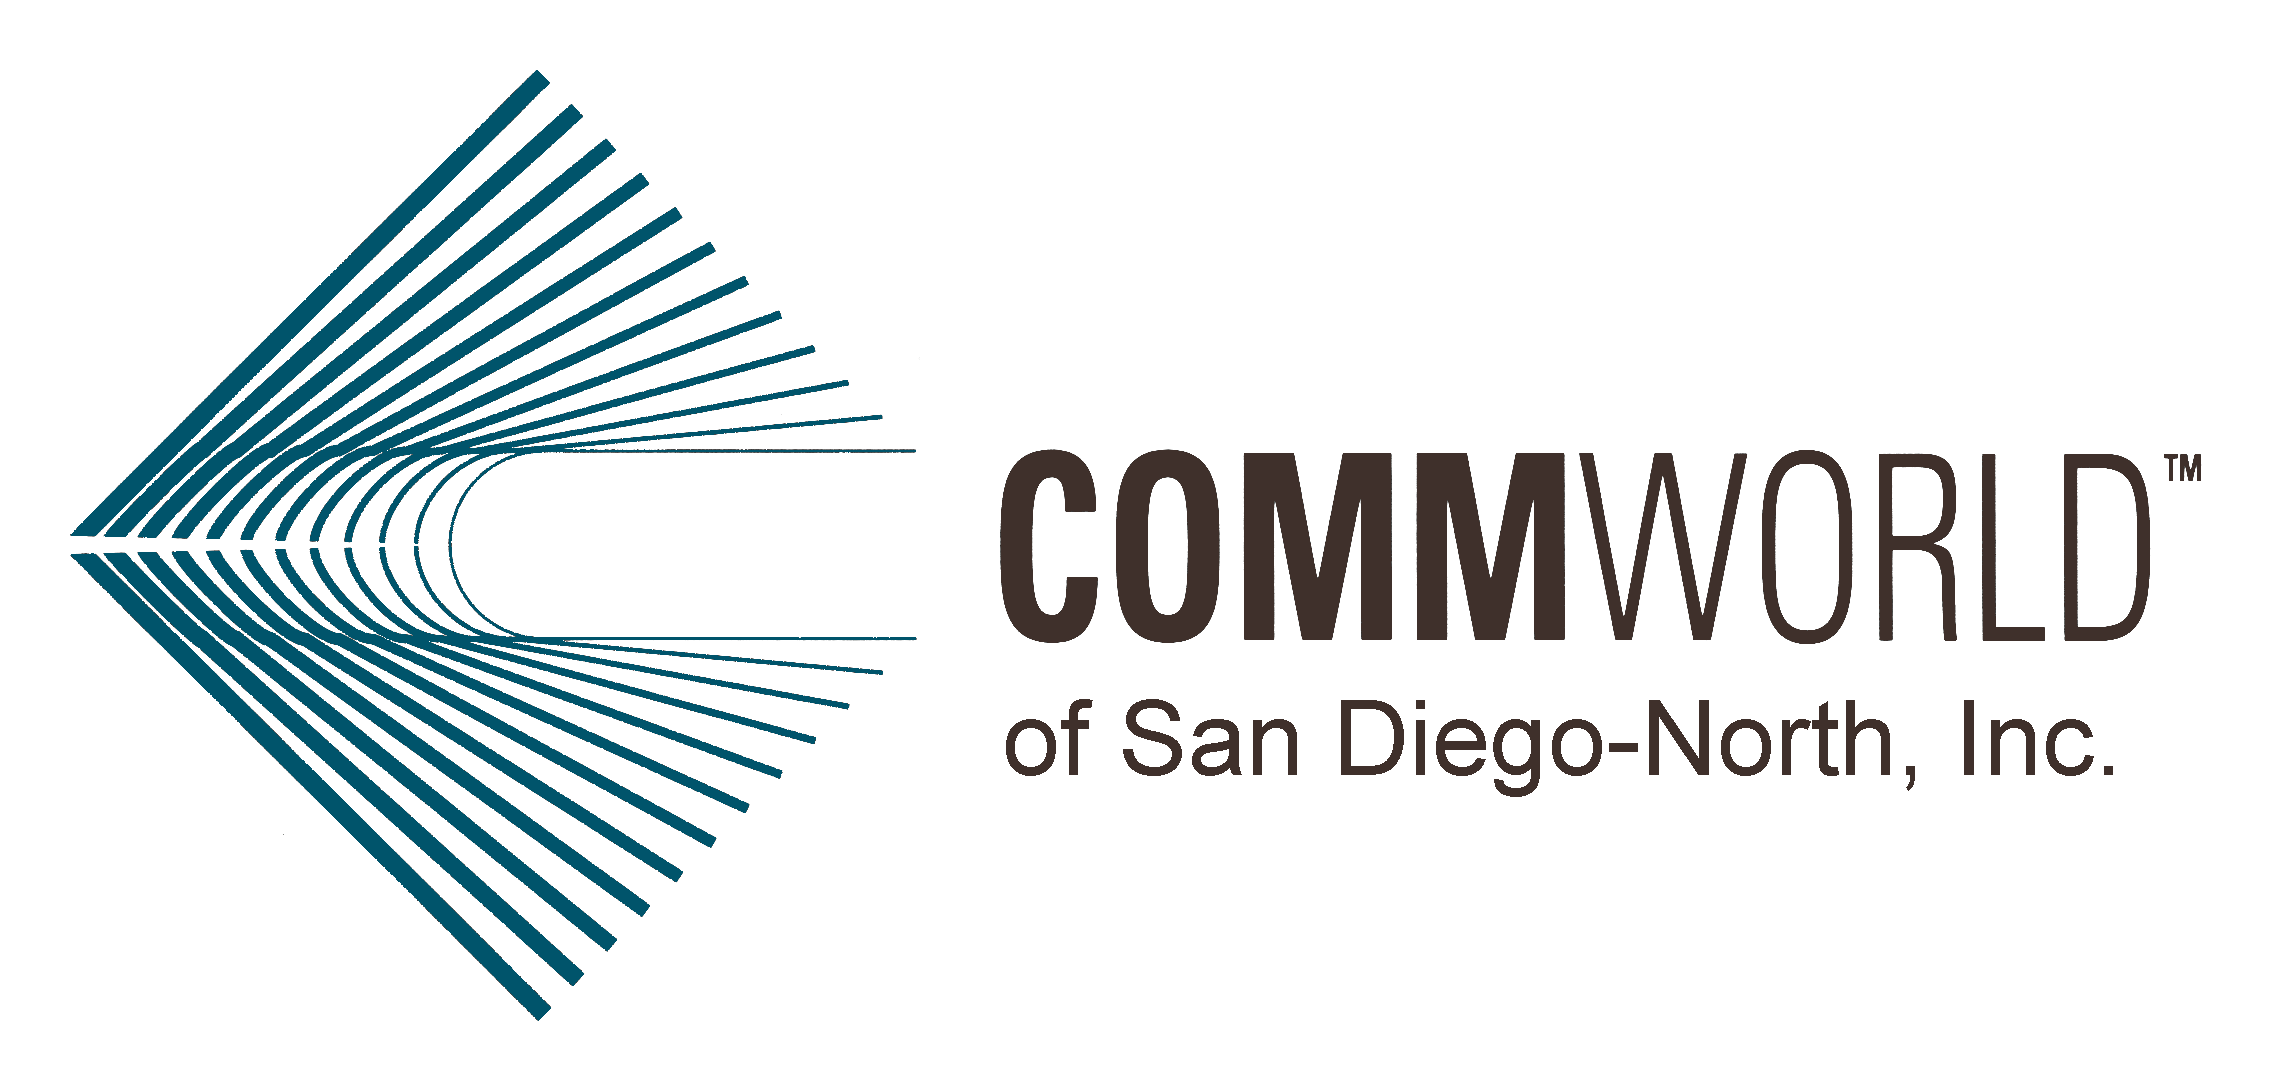 CommWorld of San Diego-North, Inc. logo